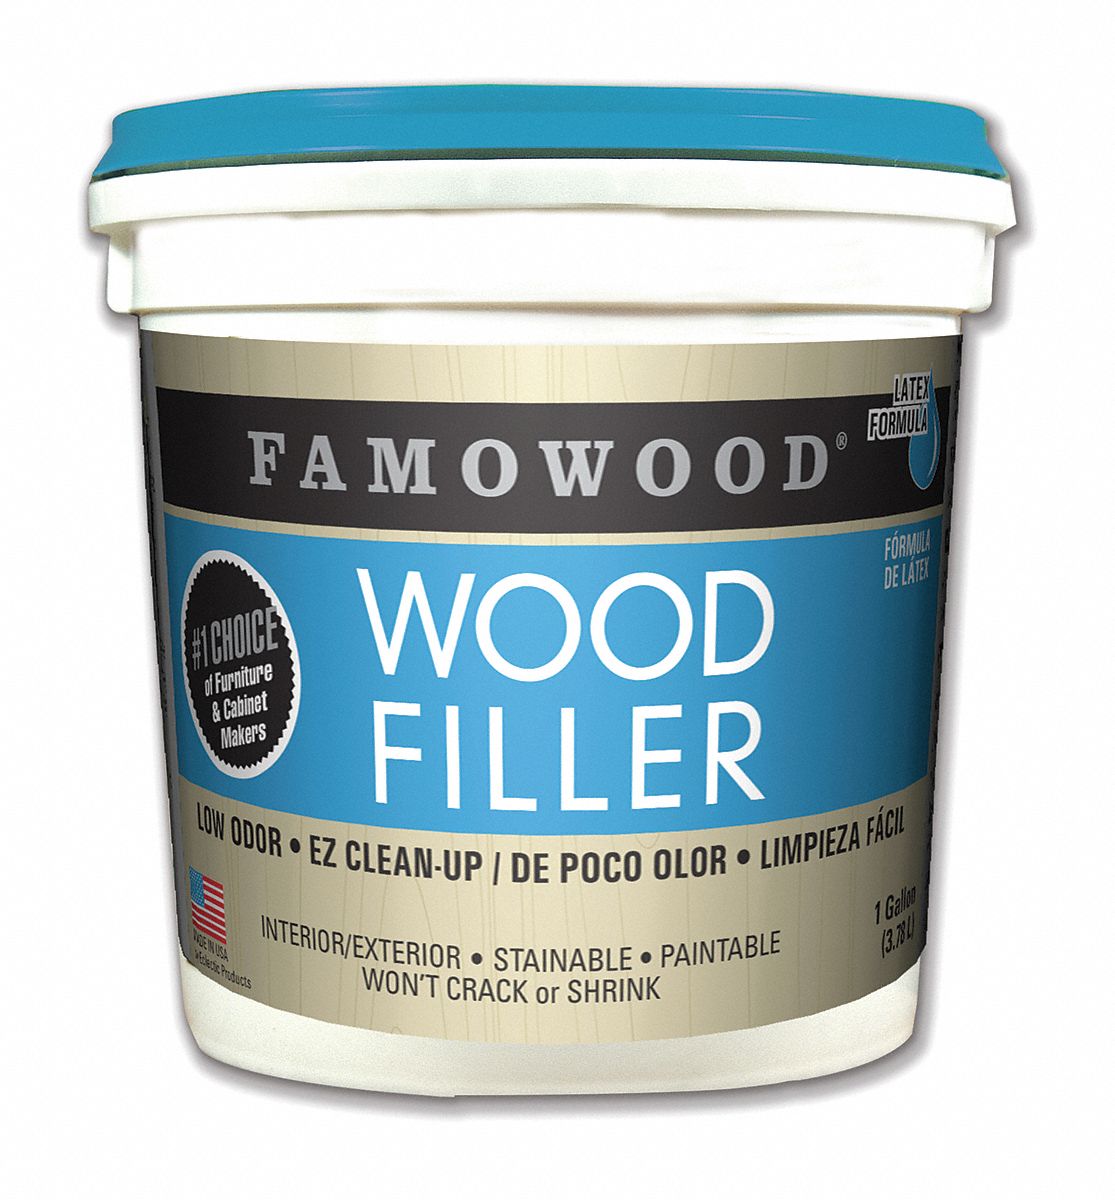 Filler: Original Wood Filler, 192 oz Container Size, Pail, White Pine, Wood Filler